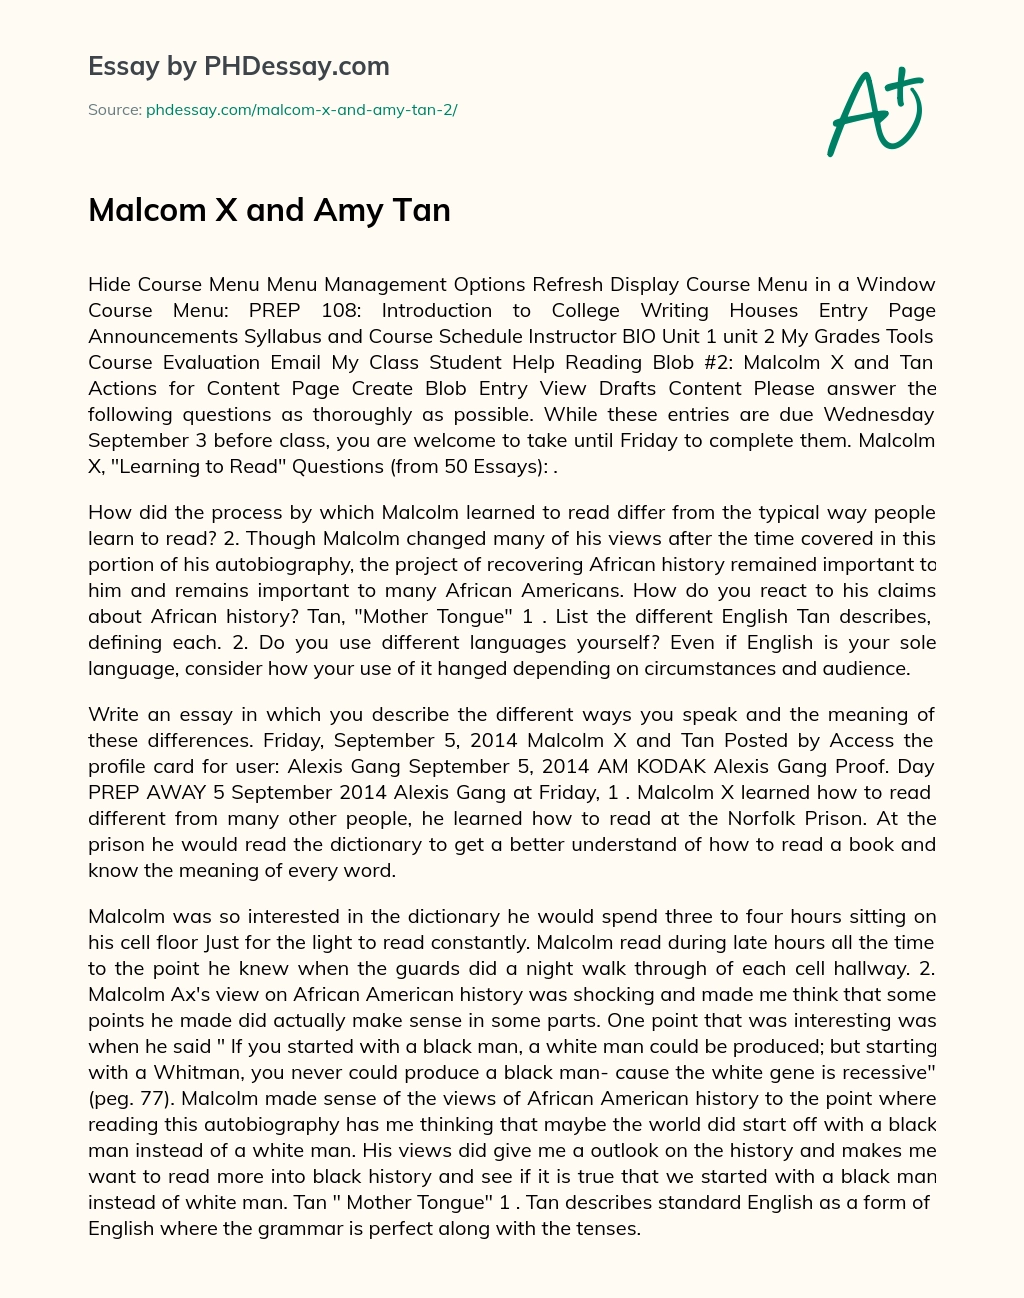 Malcom X and Amy Tan essay